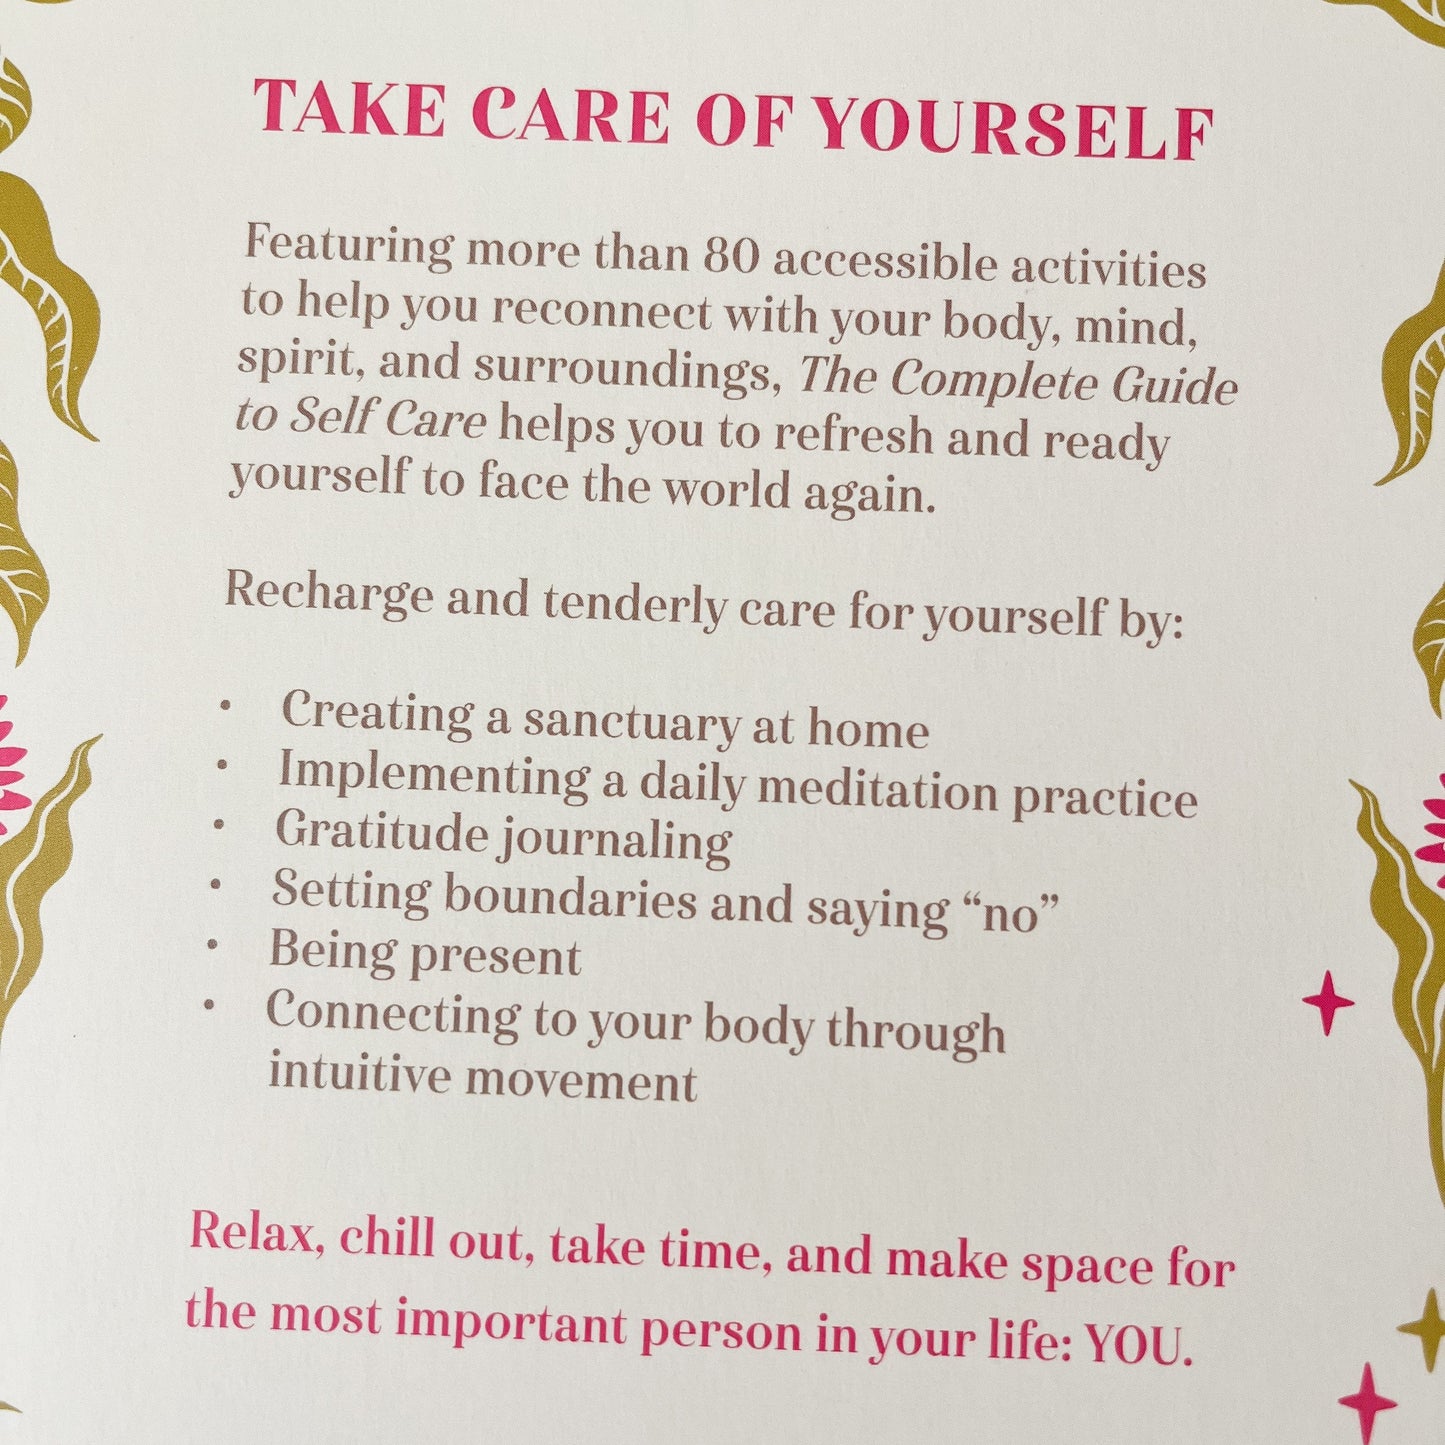 Complete Guide to Self-Care Book